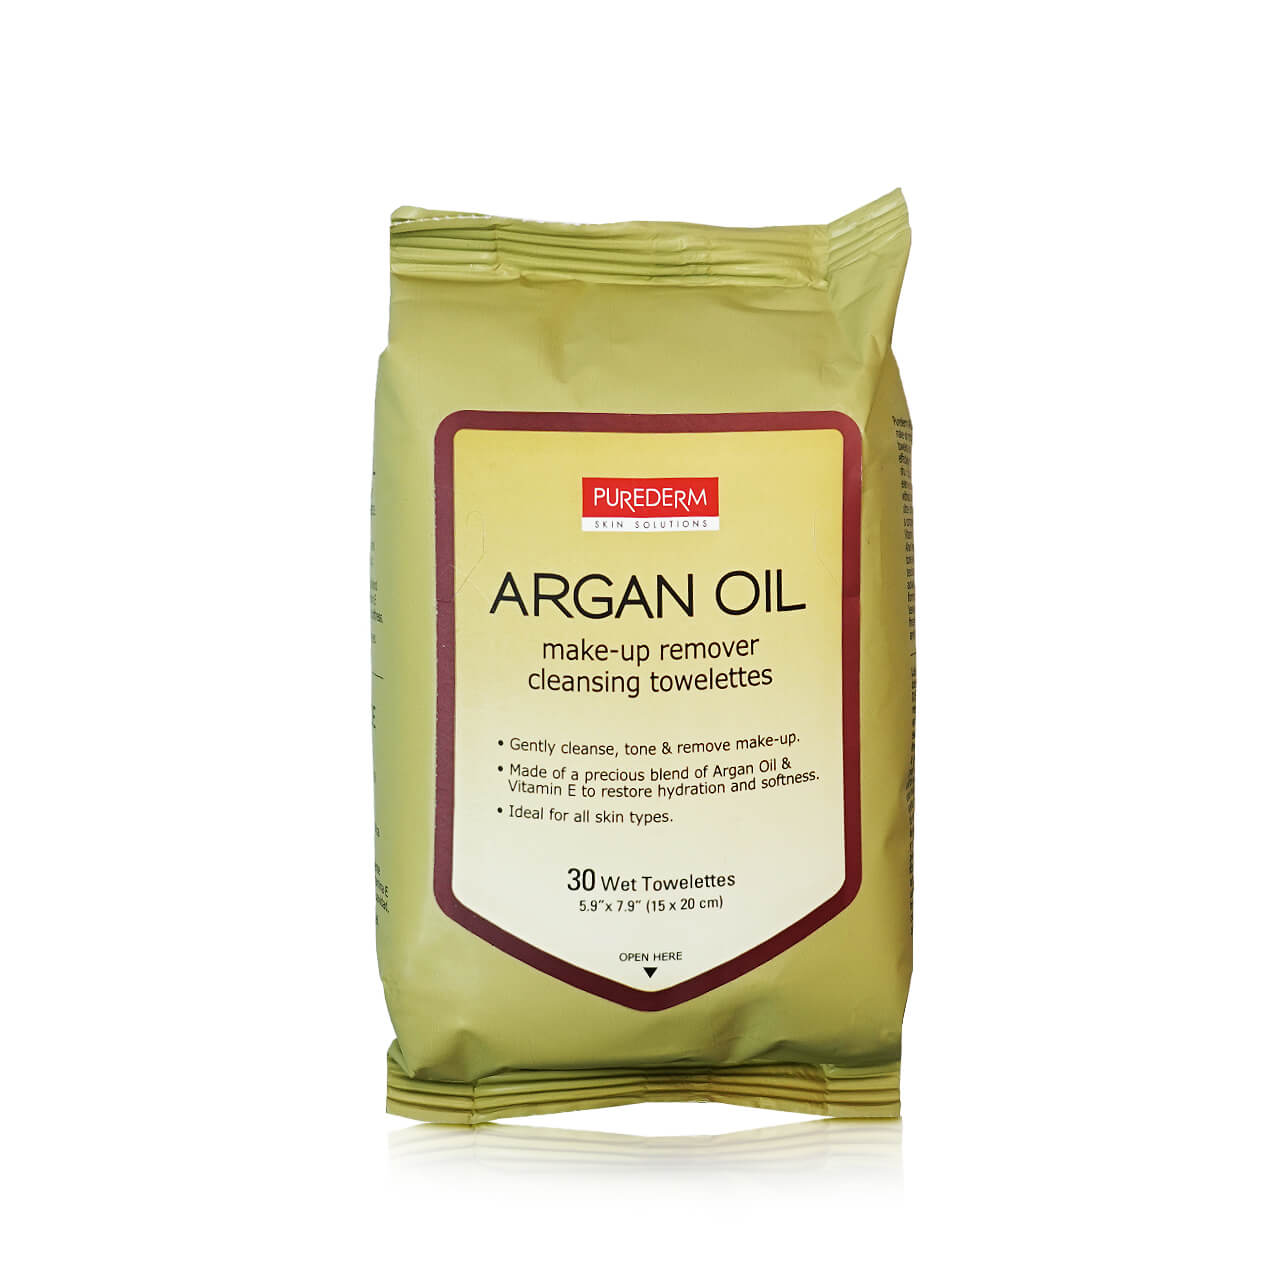 70-8809052589301-PU-ADS630 Pure Derm Make Up Remover Towelettes Argan Oil